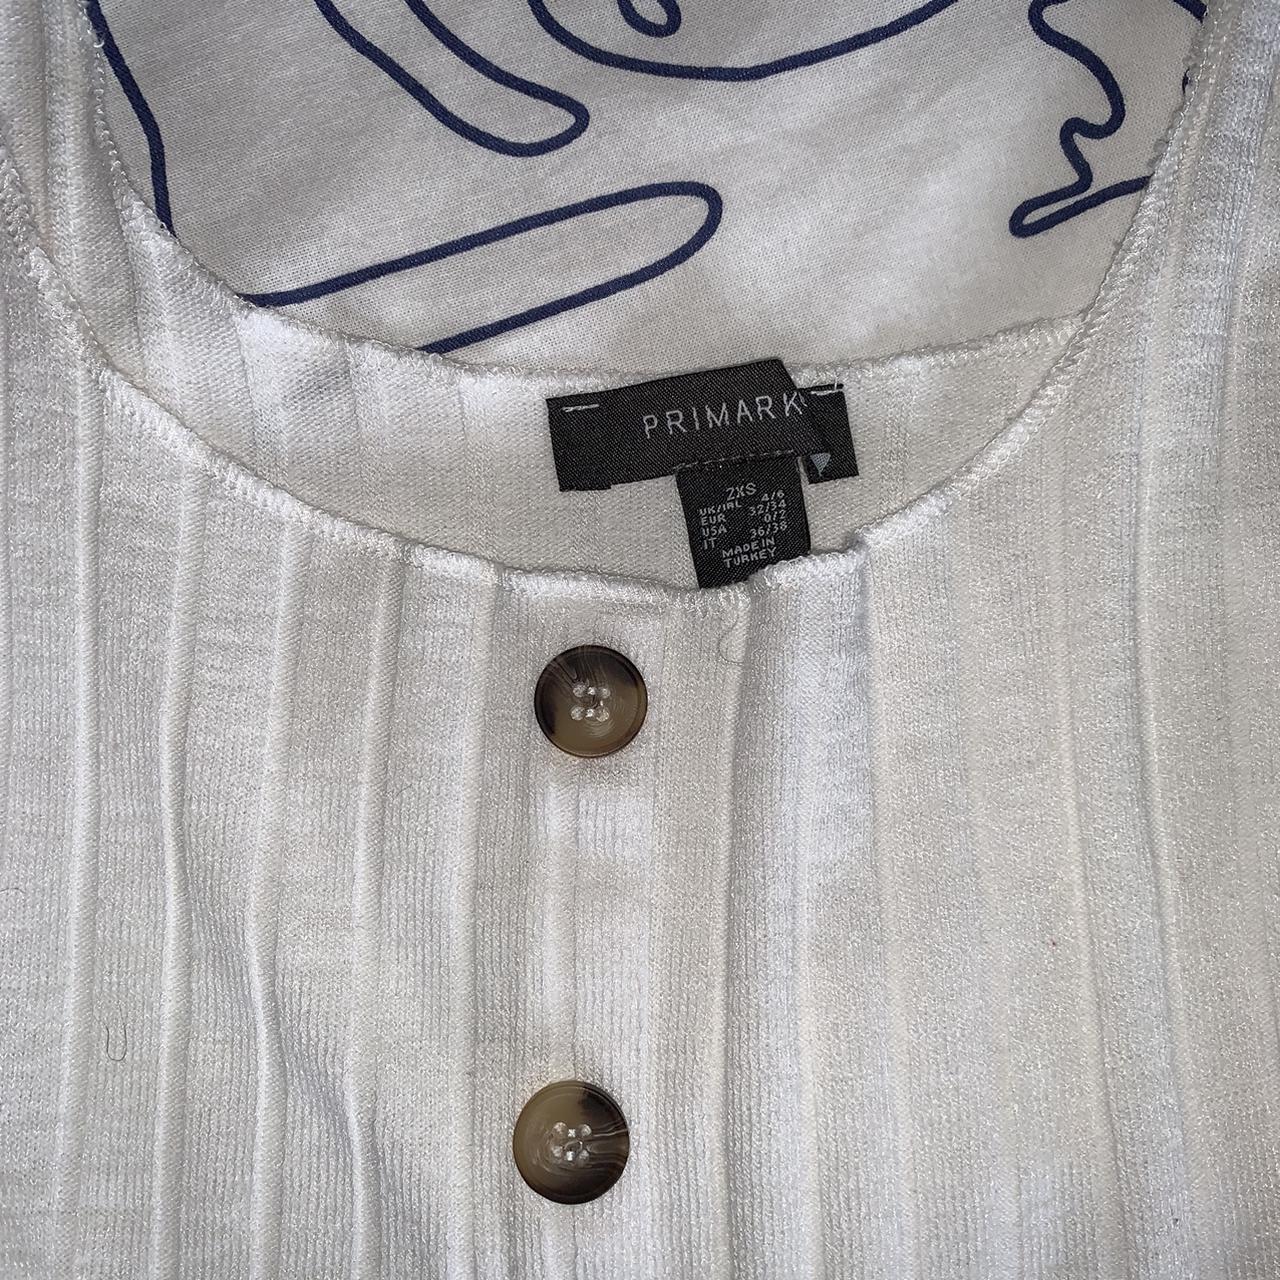 primark button down white ribbed vest cami top ;... - Depop